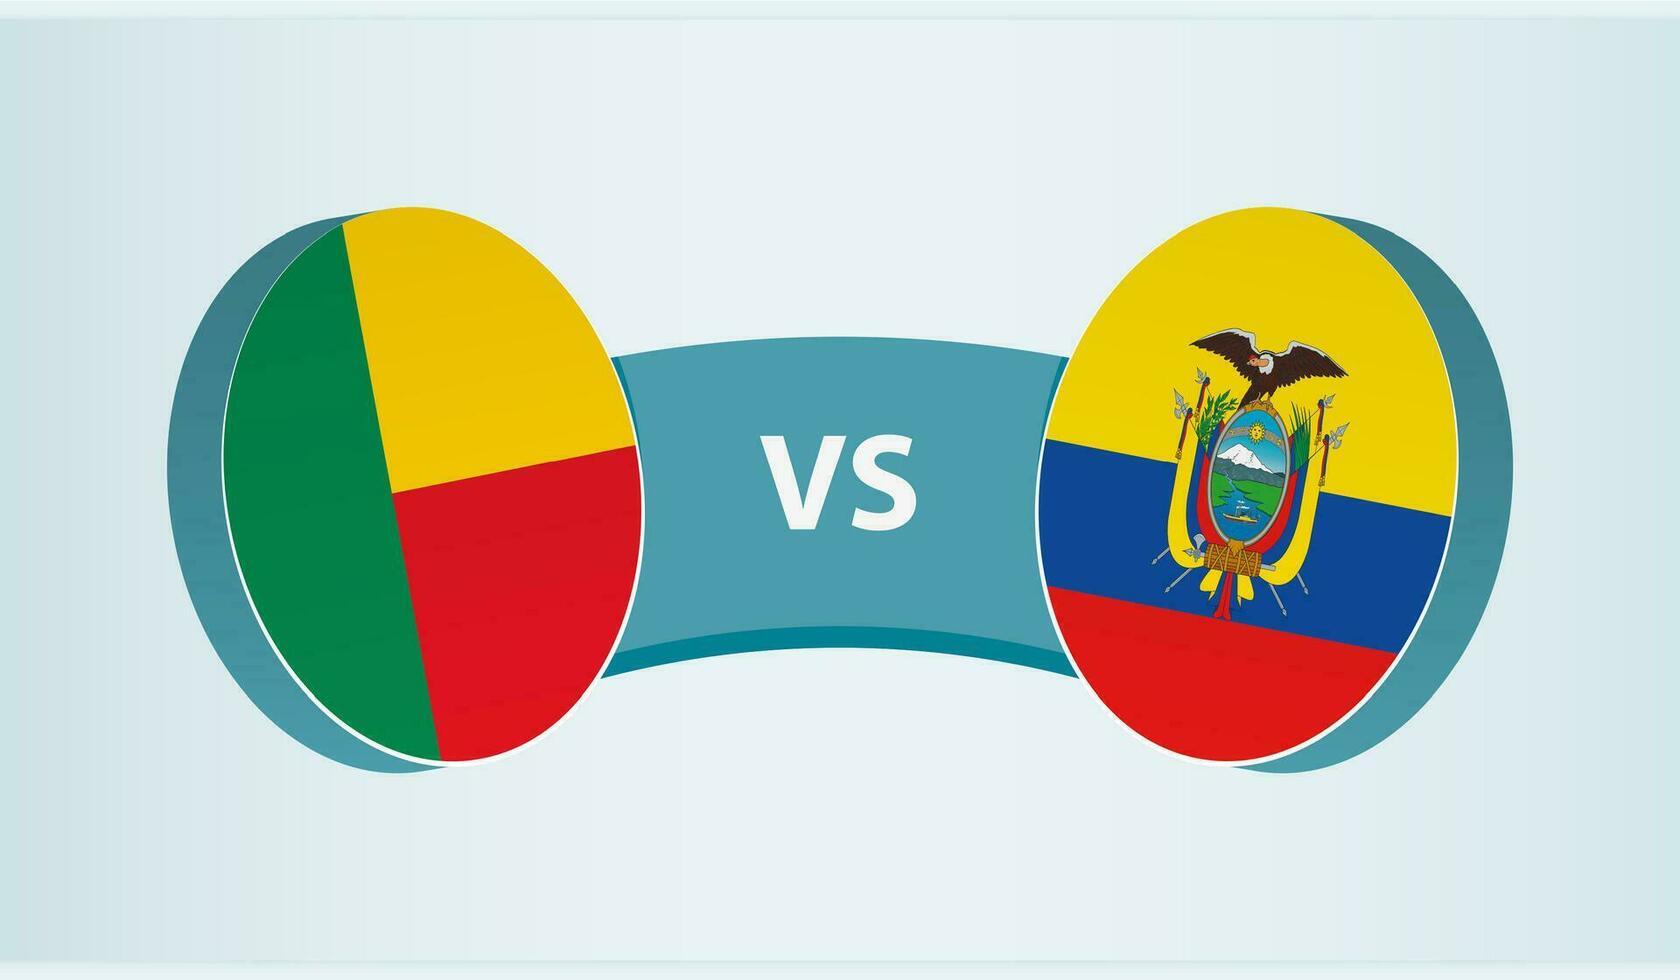 benin versus Ecuador, equipo Deportes competencia concepto. vector